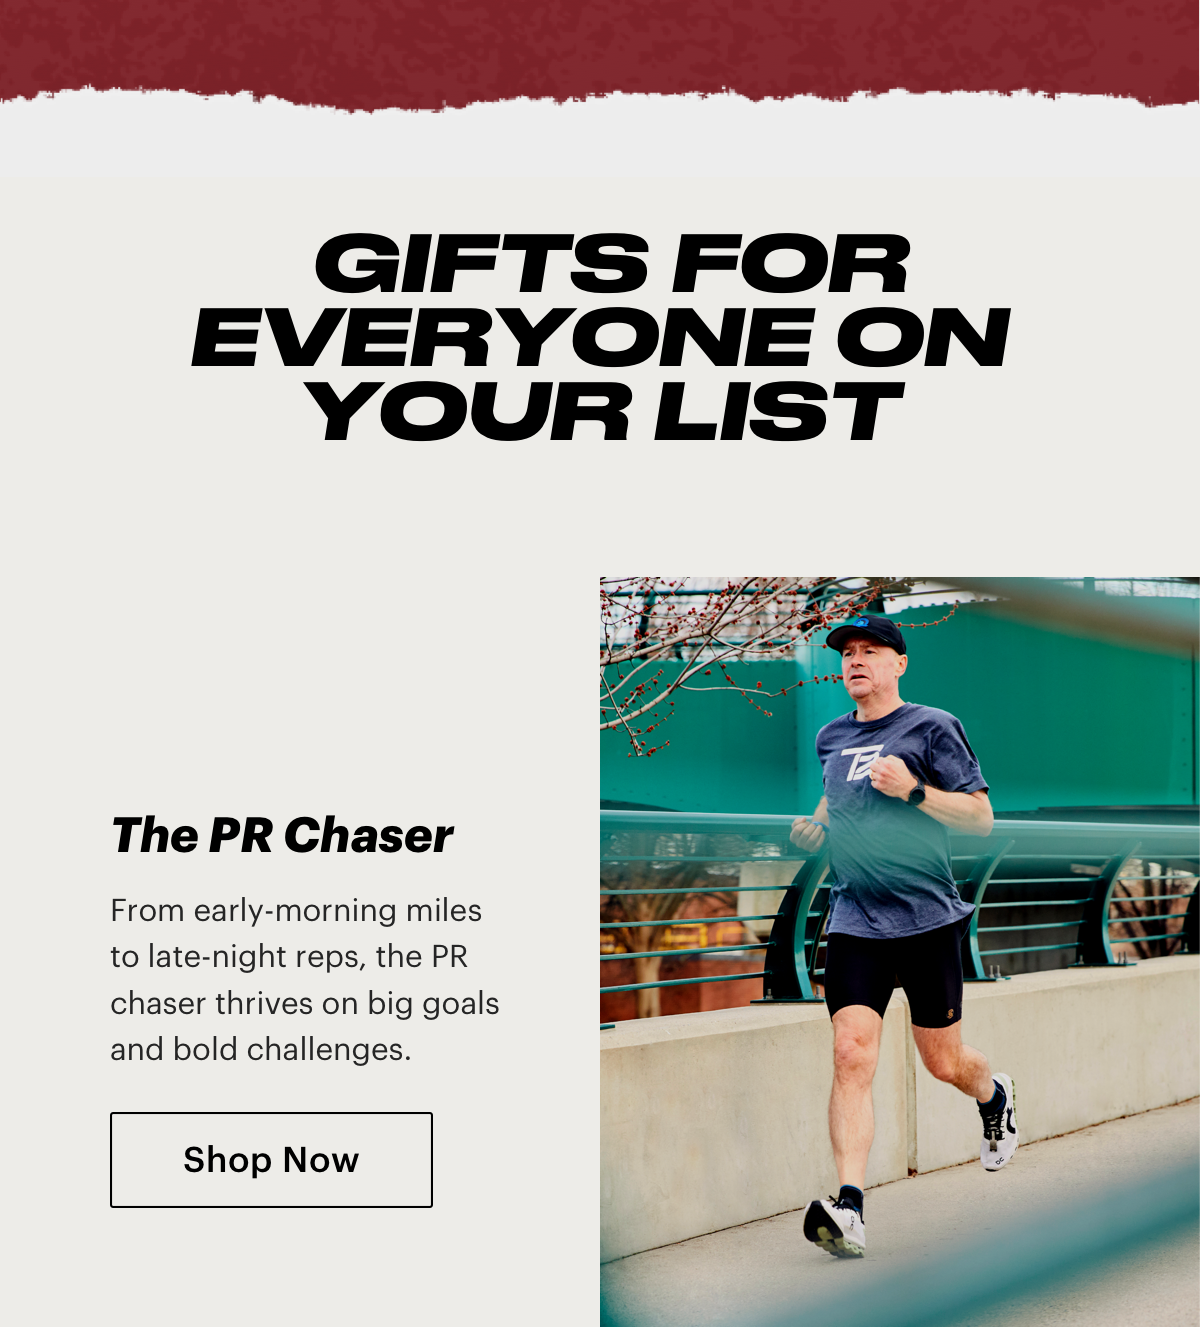 The PR Chaser